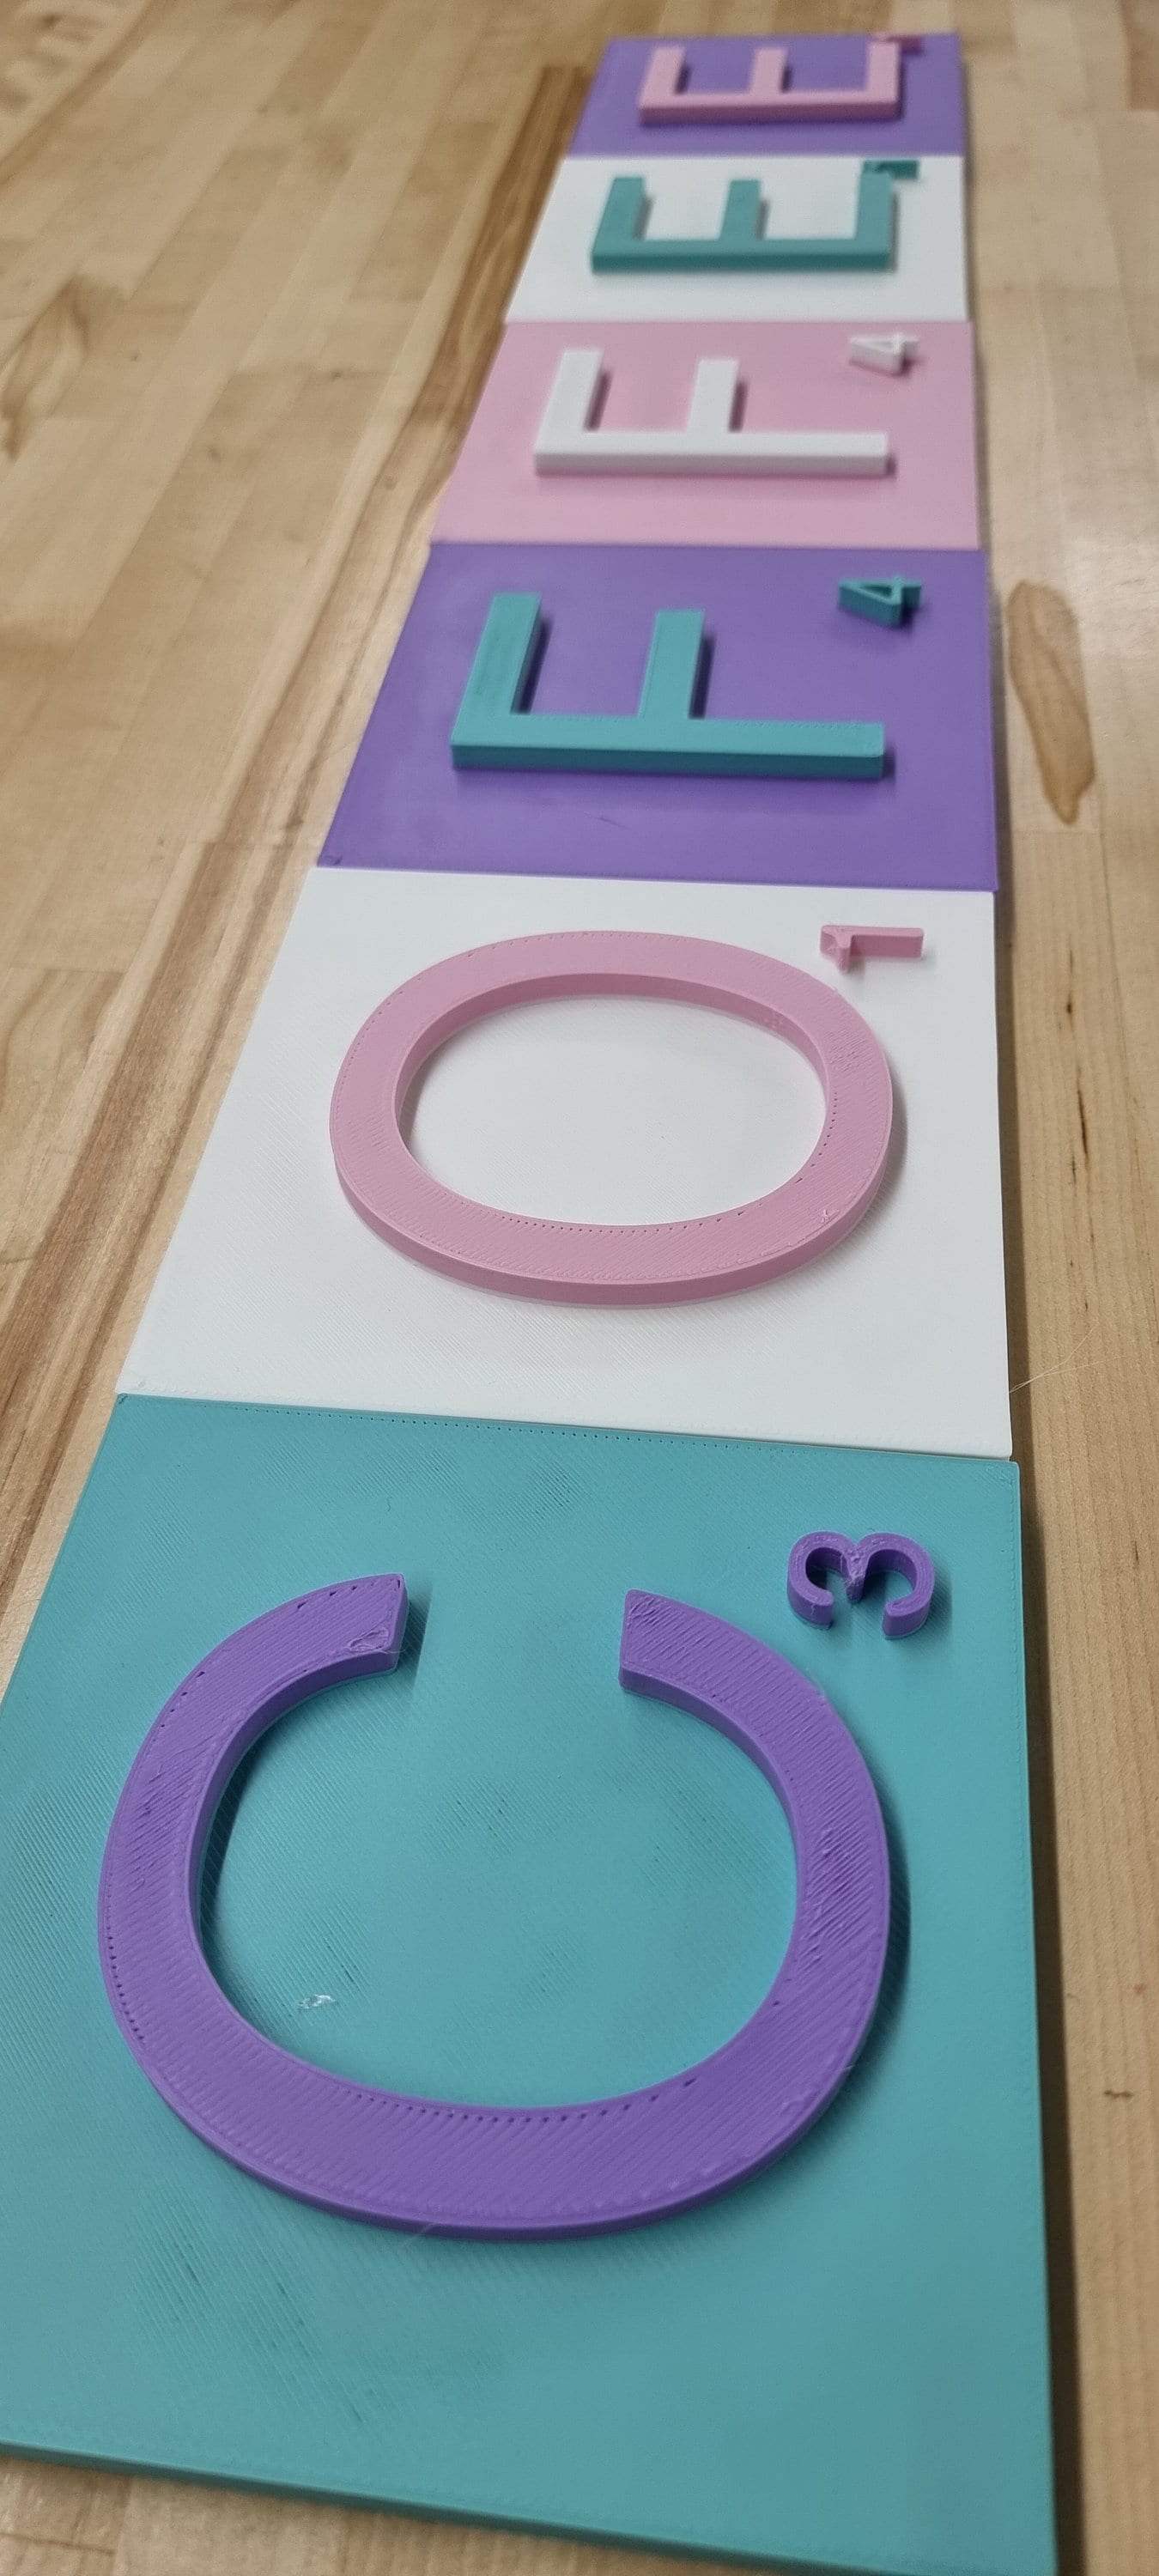 3D Effect Board Game Sign Letter Tiles - 4 Inch. Modern Look 3D Effect Sign Letter Tiles In Tons Of Colors!